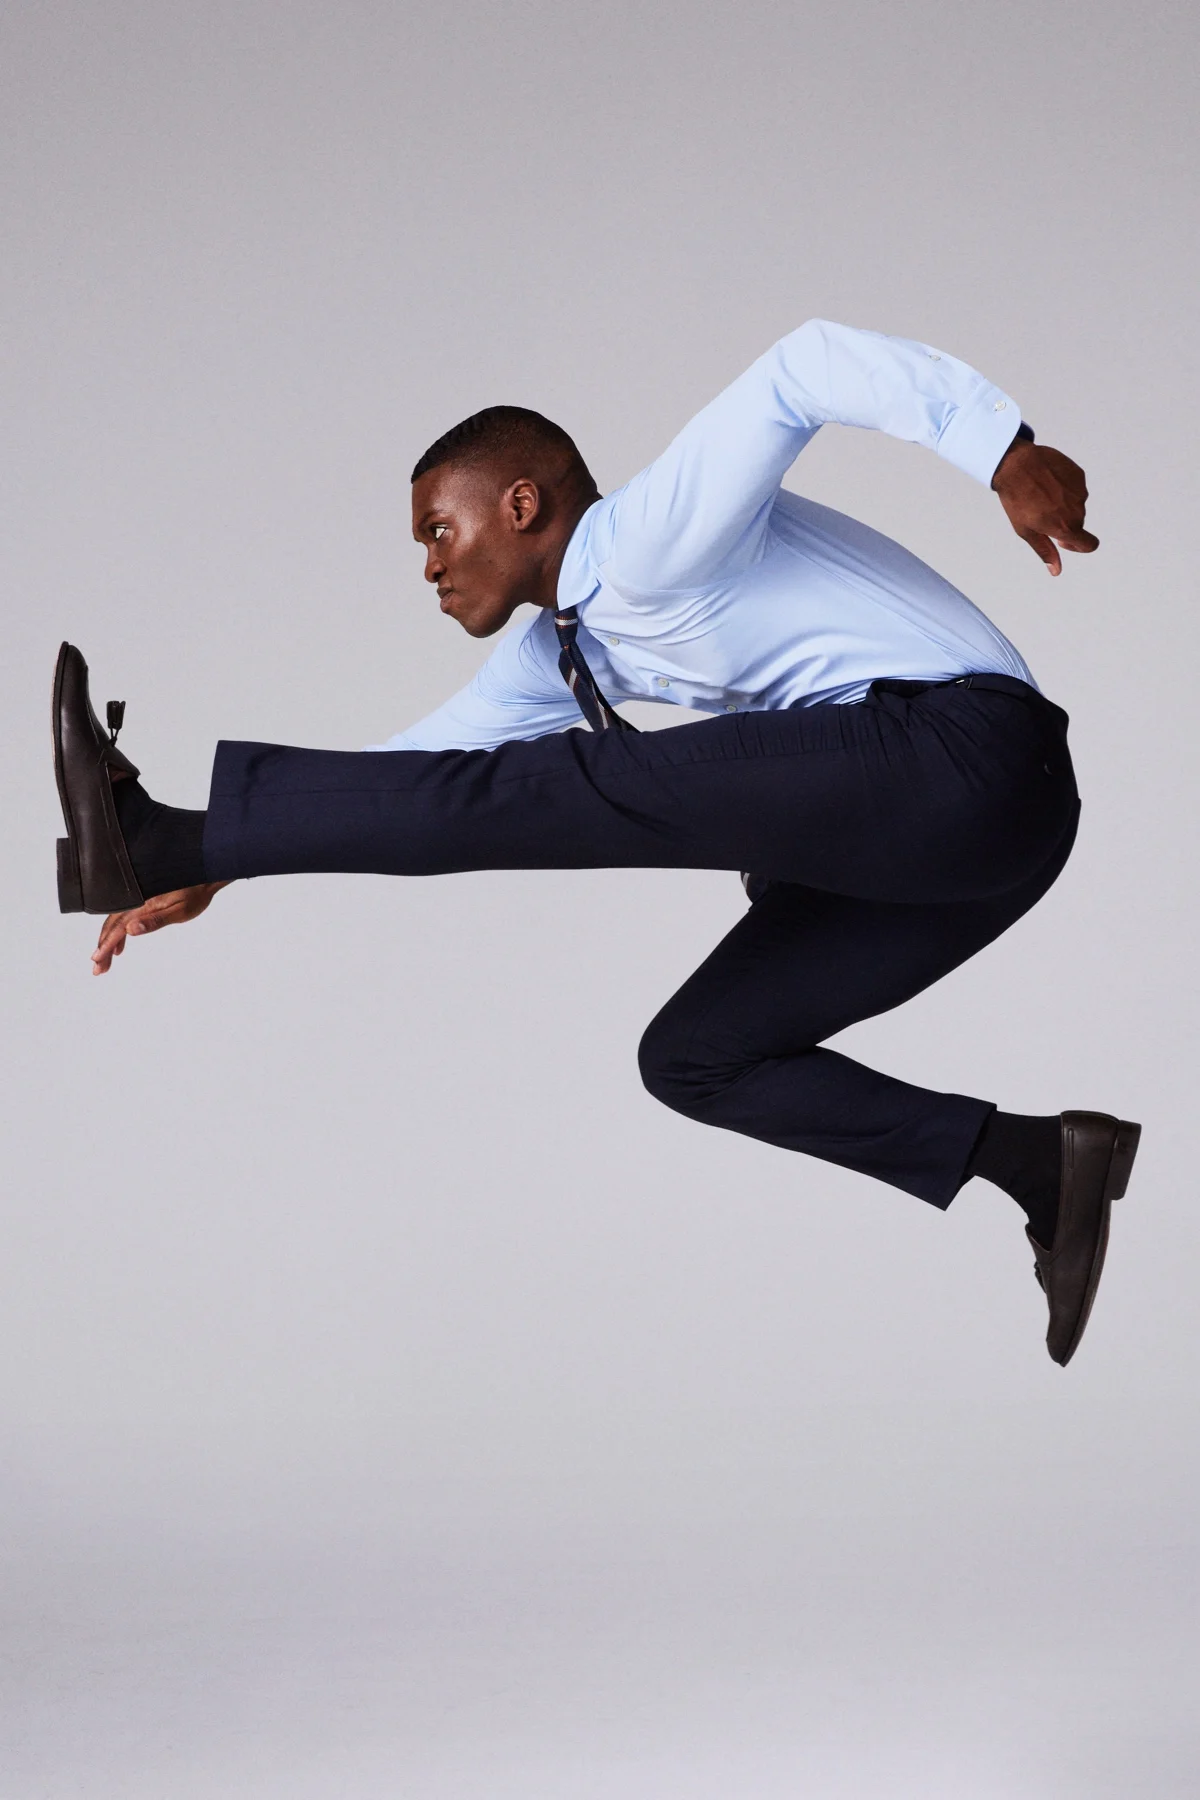 model jumping in blue shirt